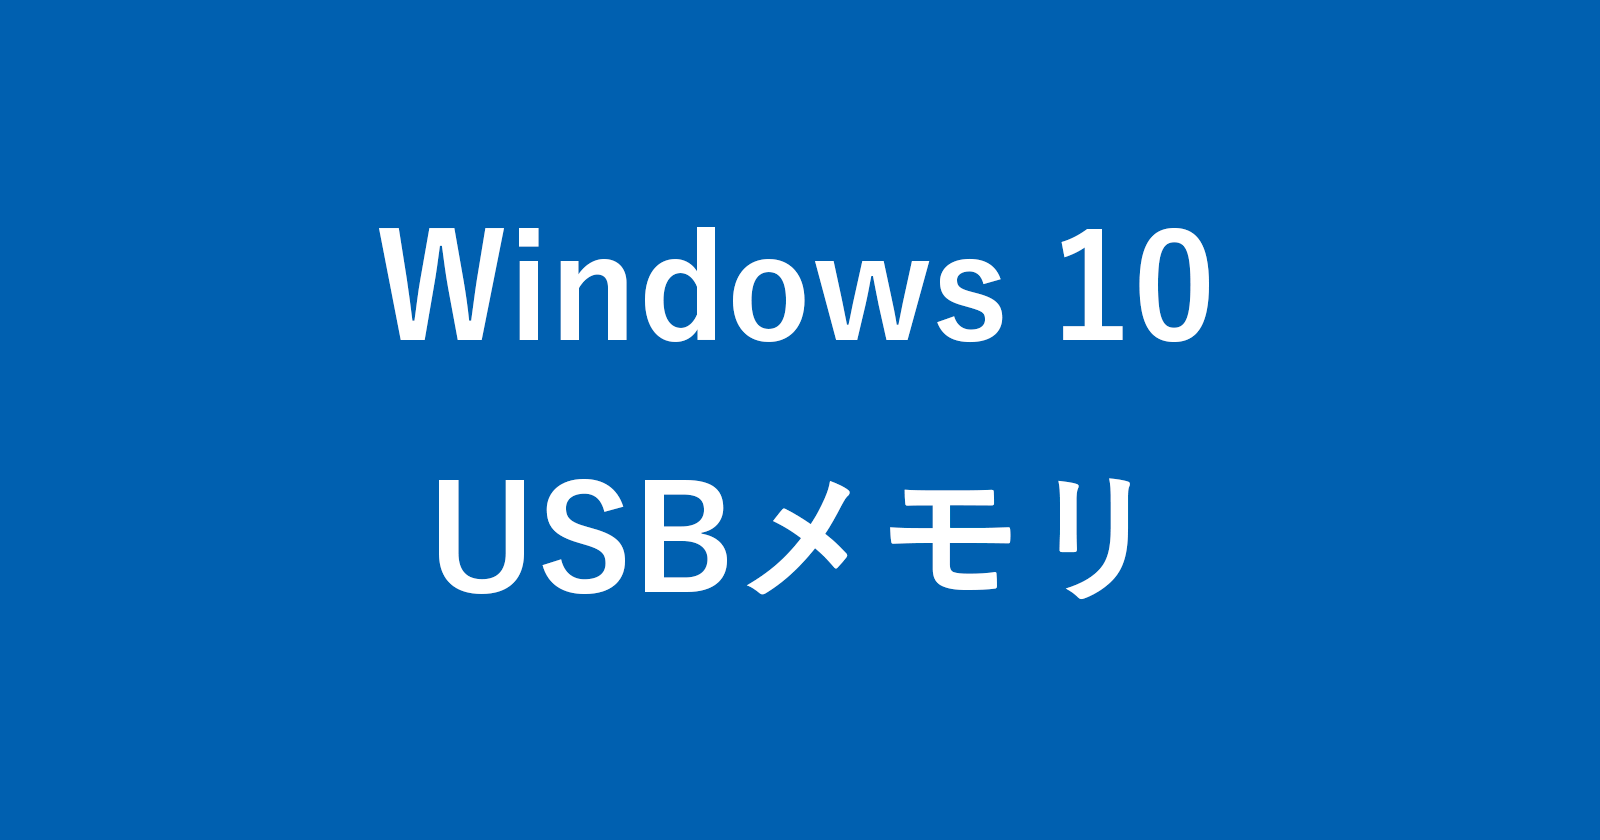 windows 10 usb memory security